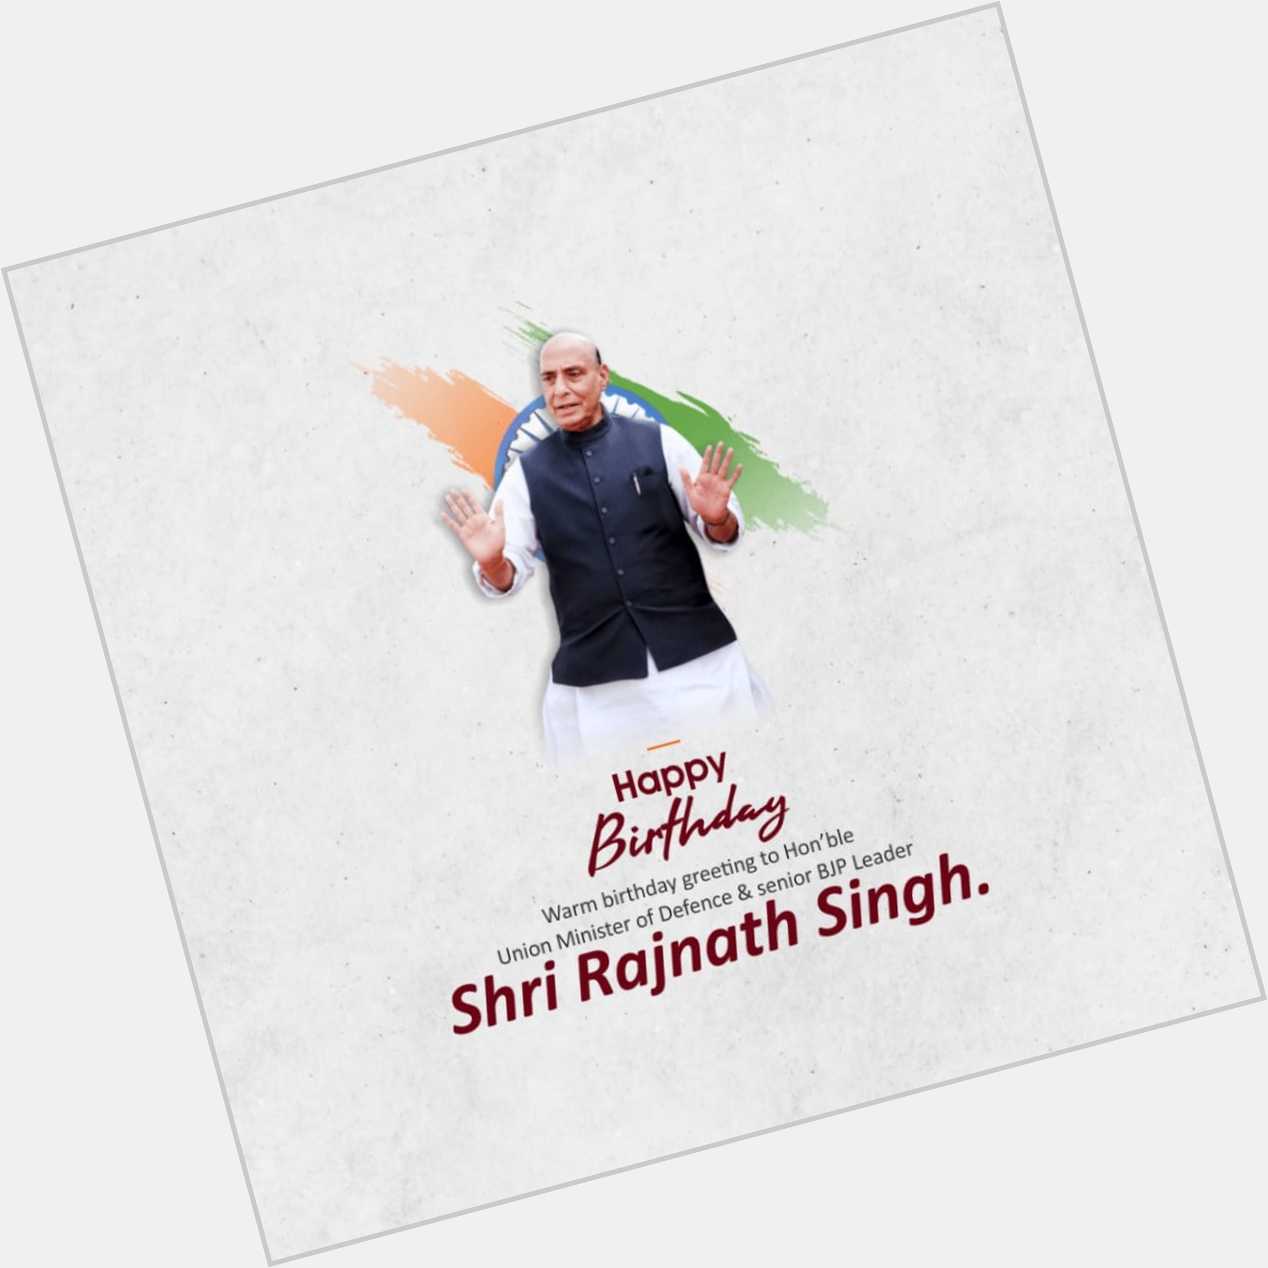 Happy birthday to shre Rajnath Singh  